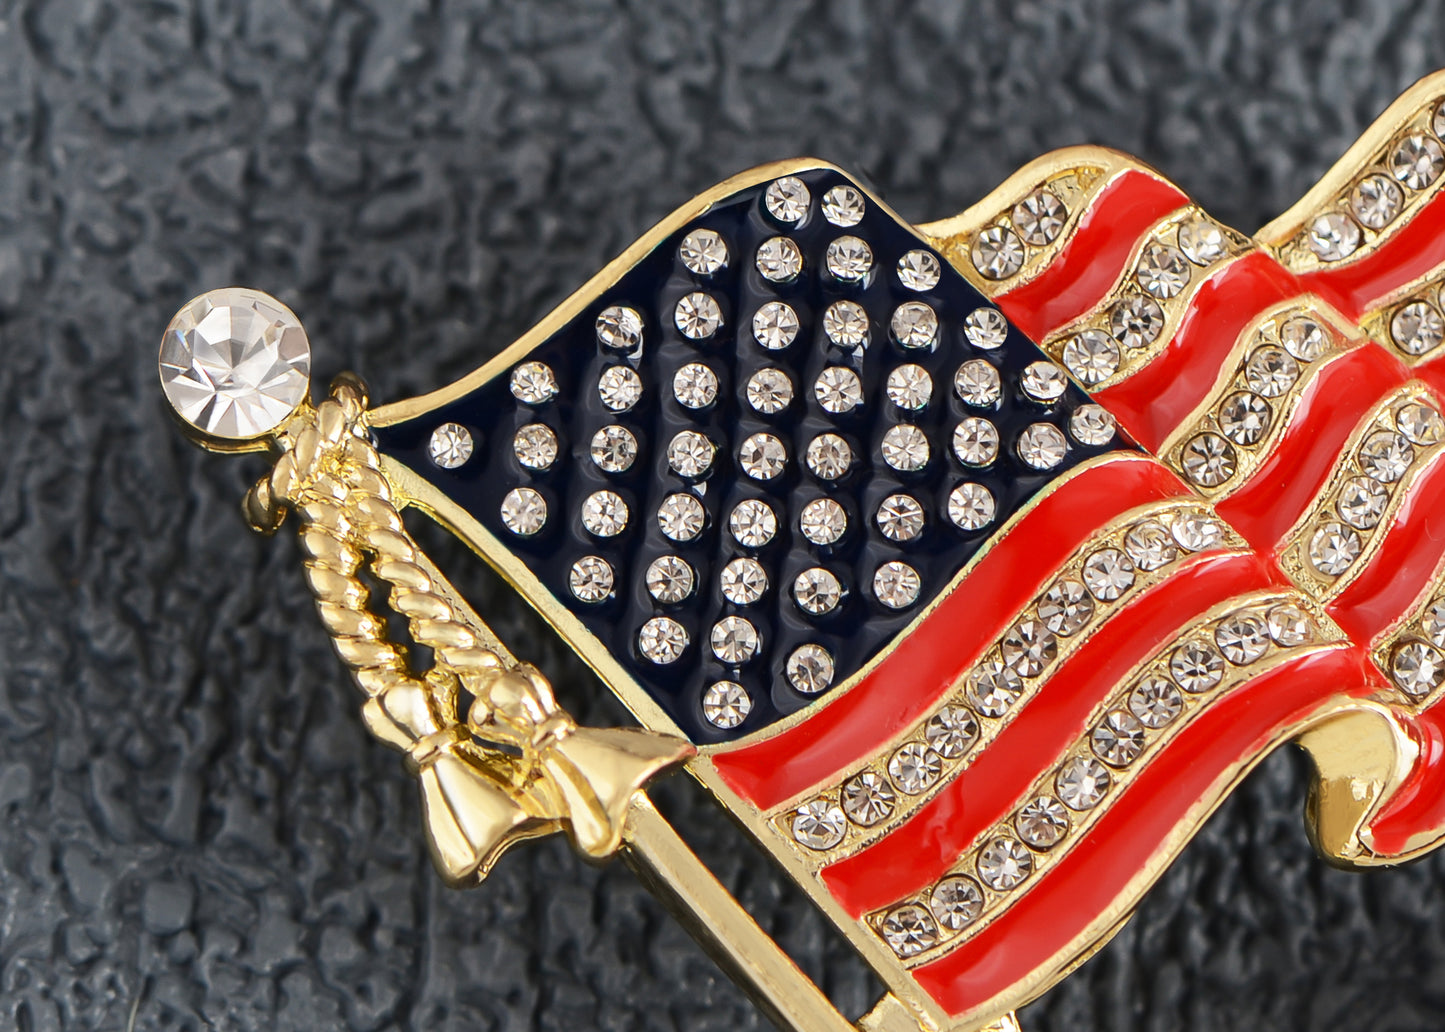 Alilang America USA Patriotic American Crystal Rhinestone Waving Flag Brooch Pin